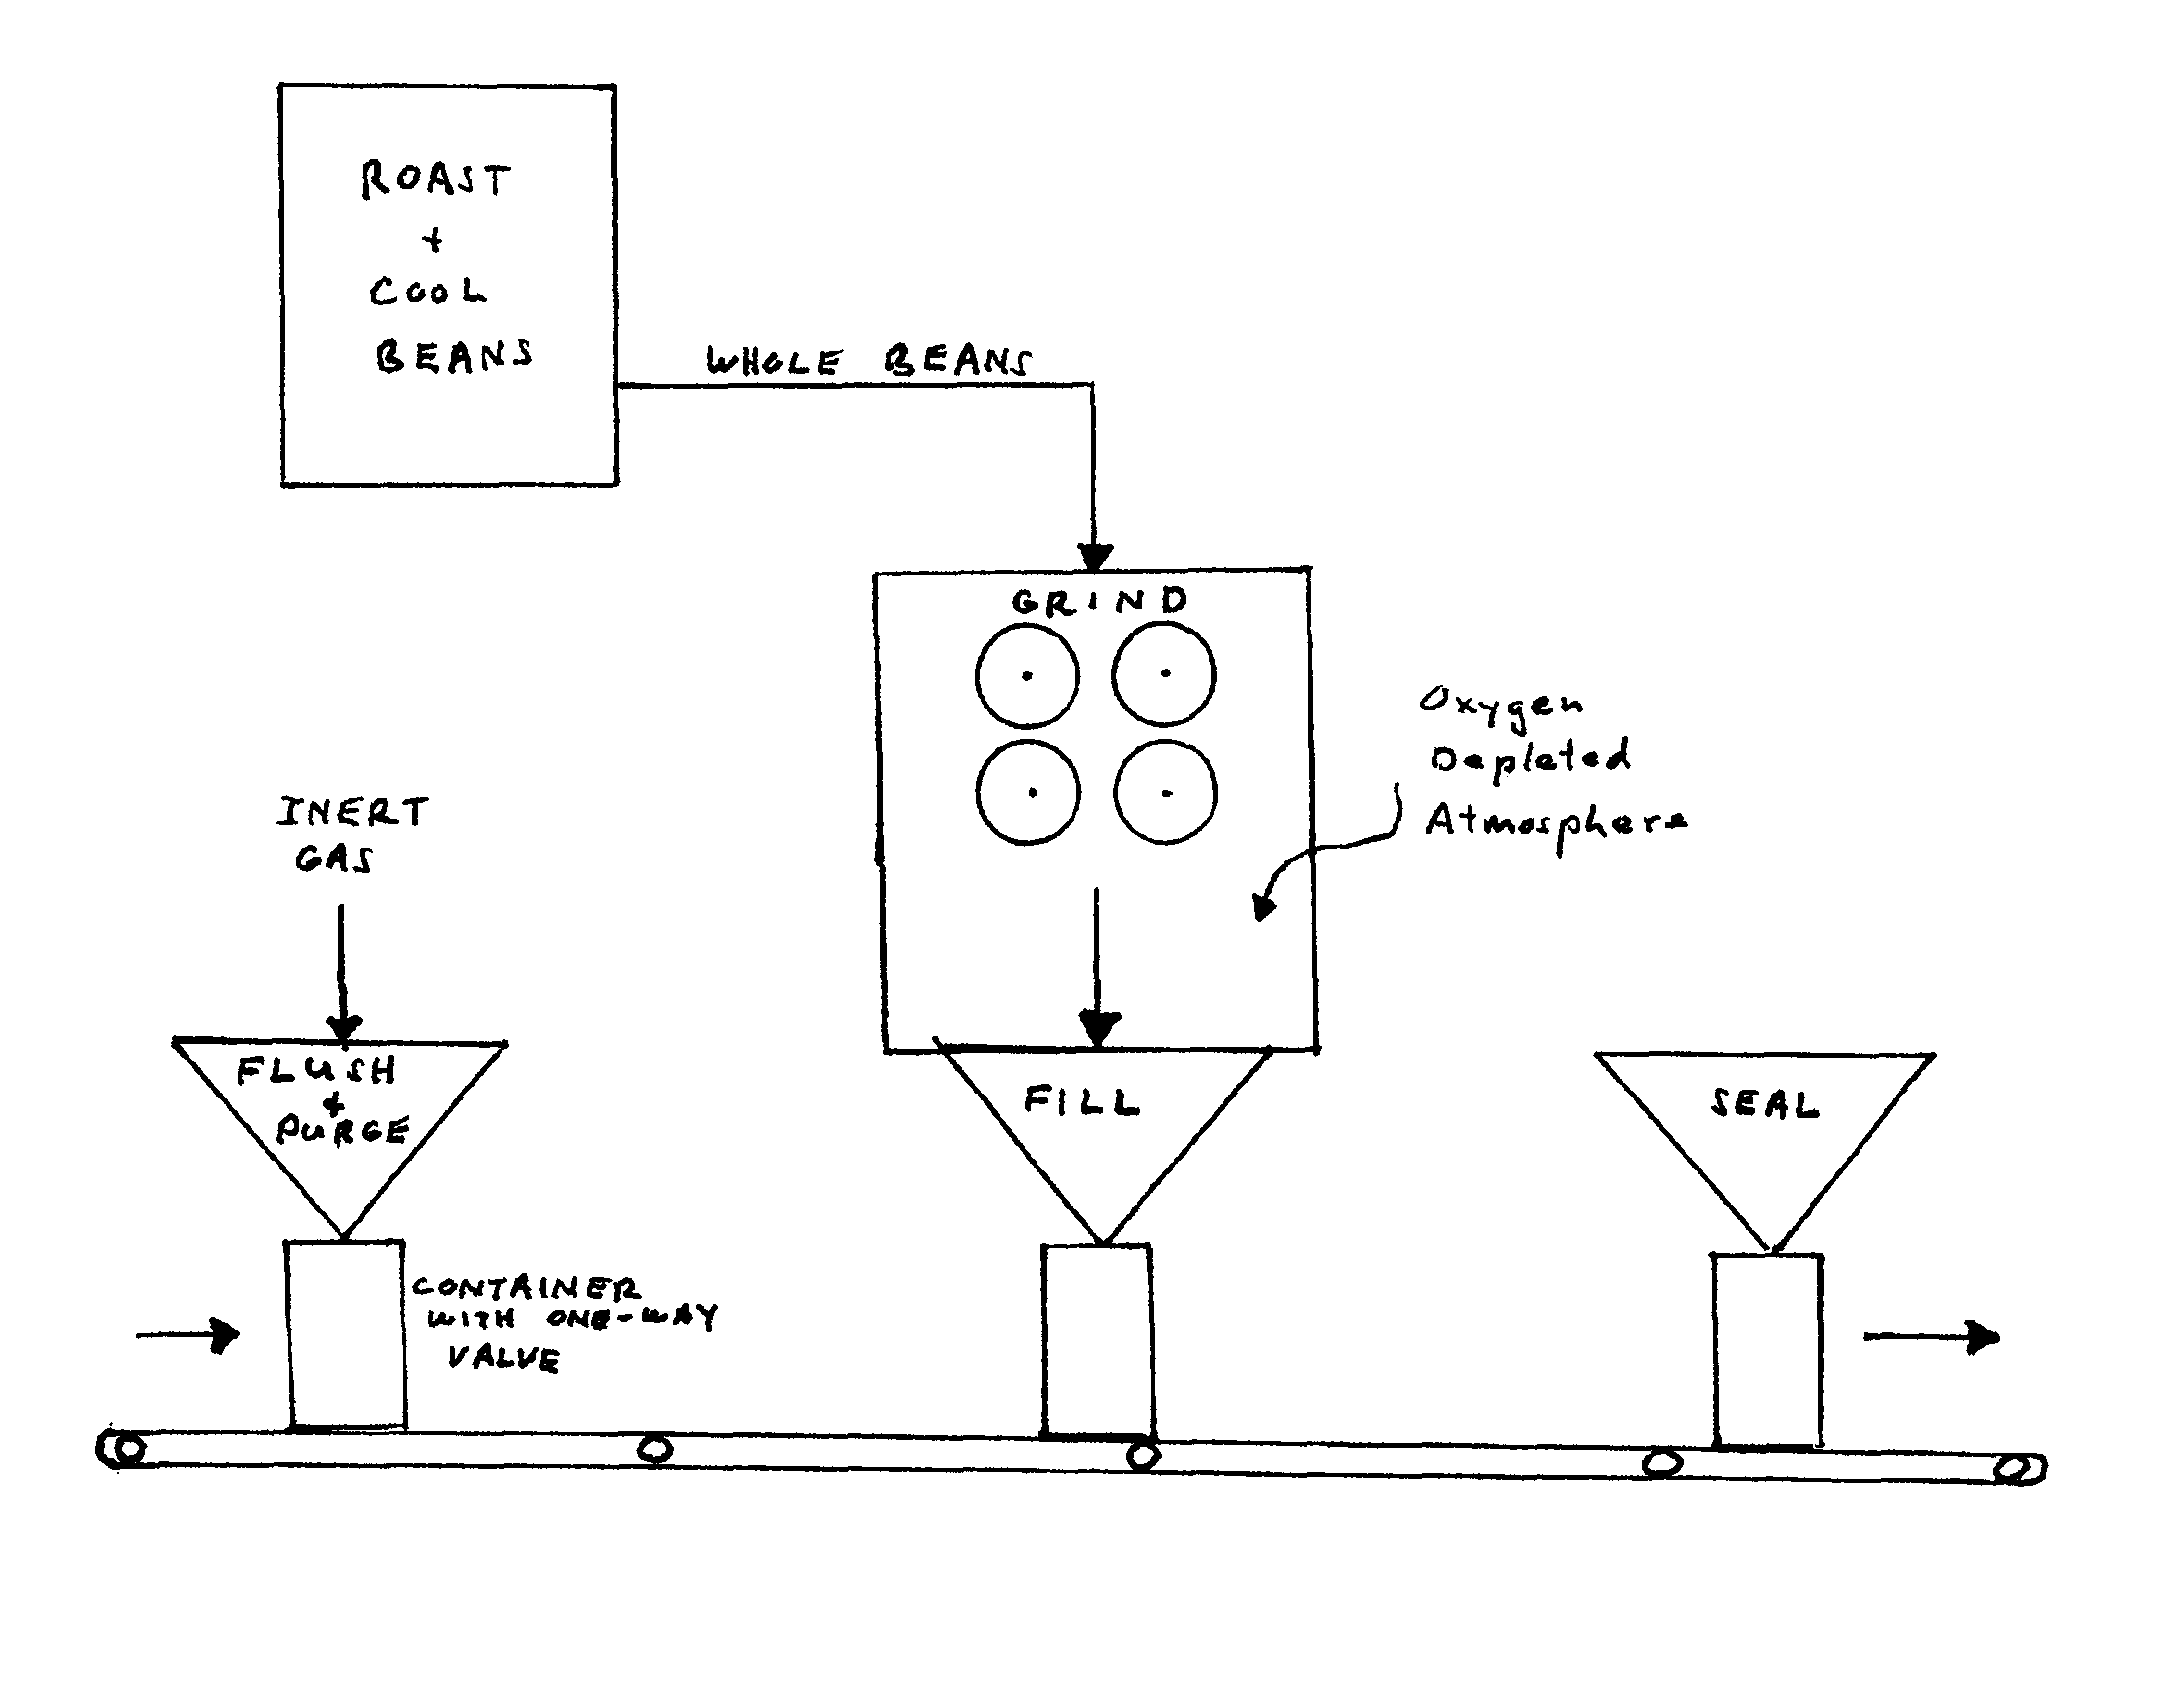 Method of processing roasted coffee